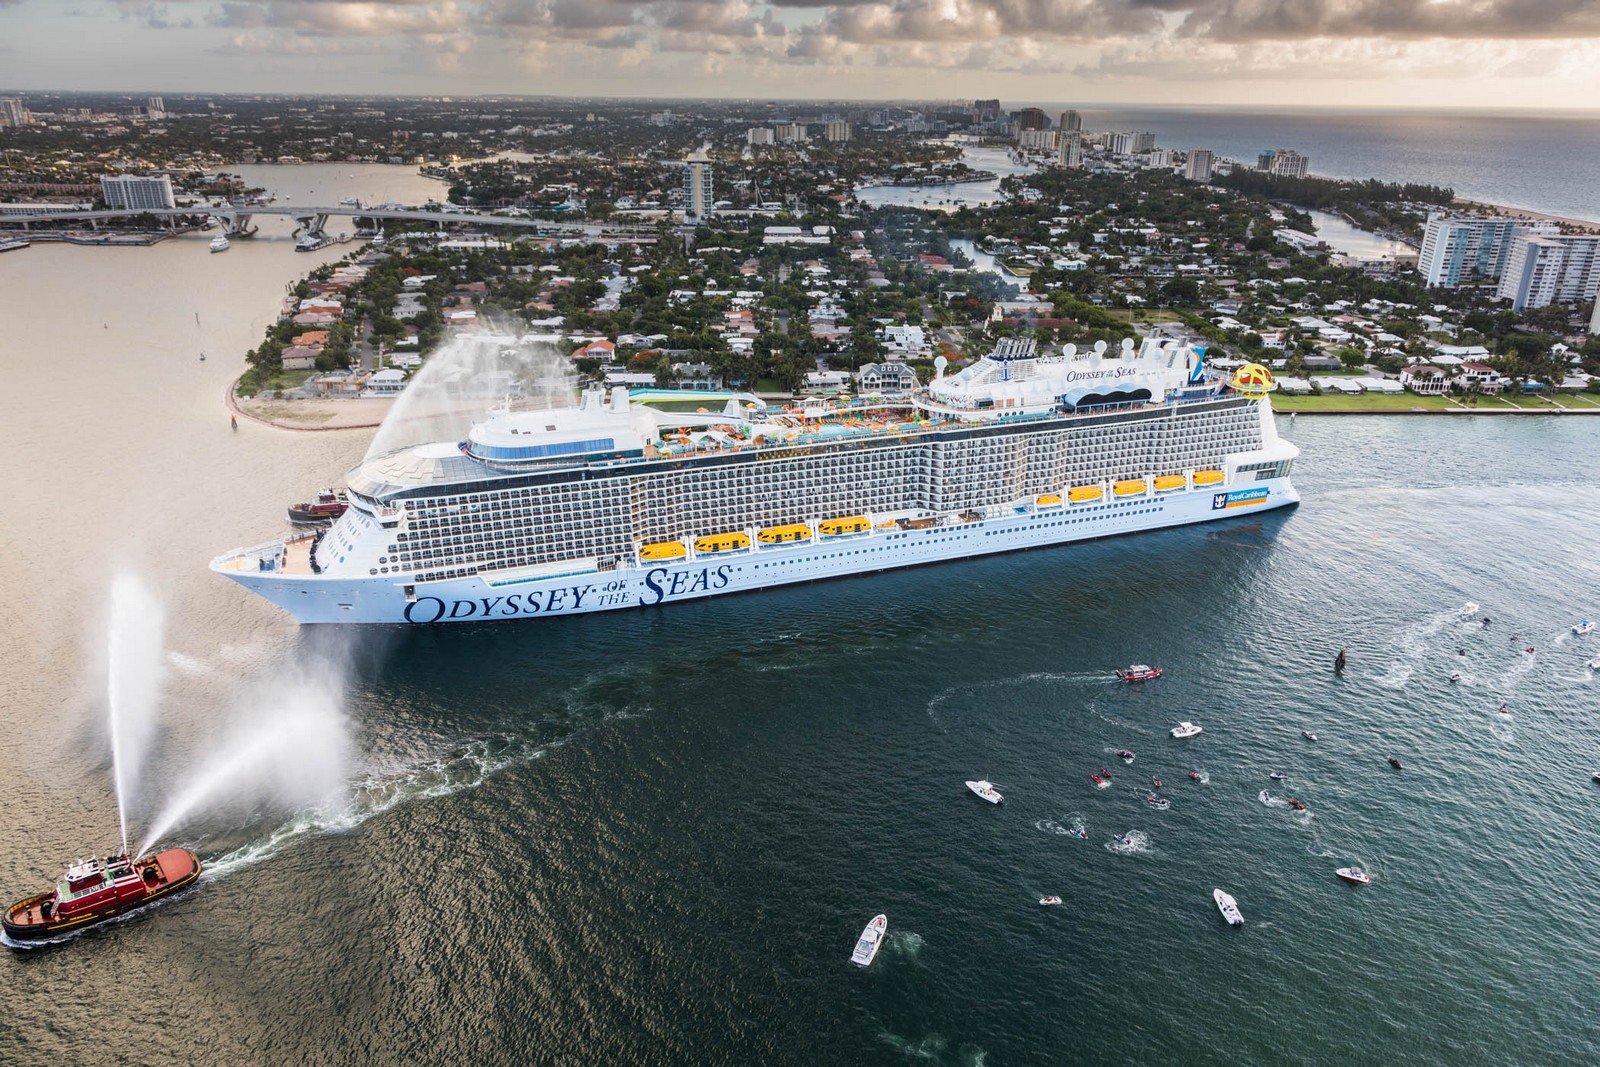 Royal Caribbean&#39;s Odyssey of the Seas arrives in Fort Lauderdale | Royal Caribbean Blog